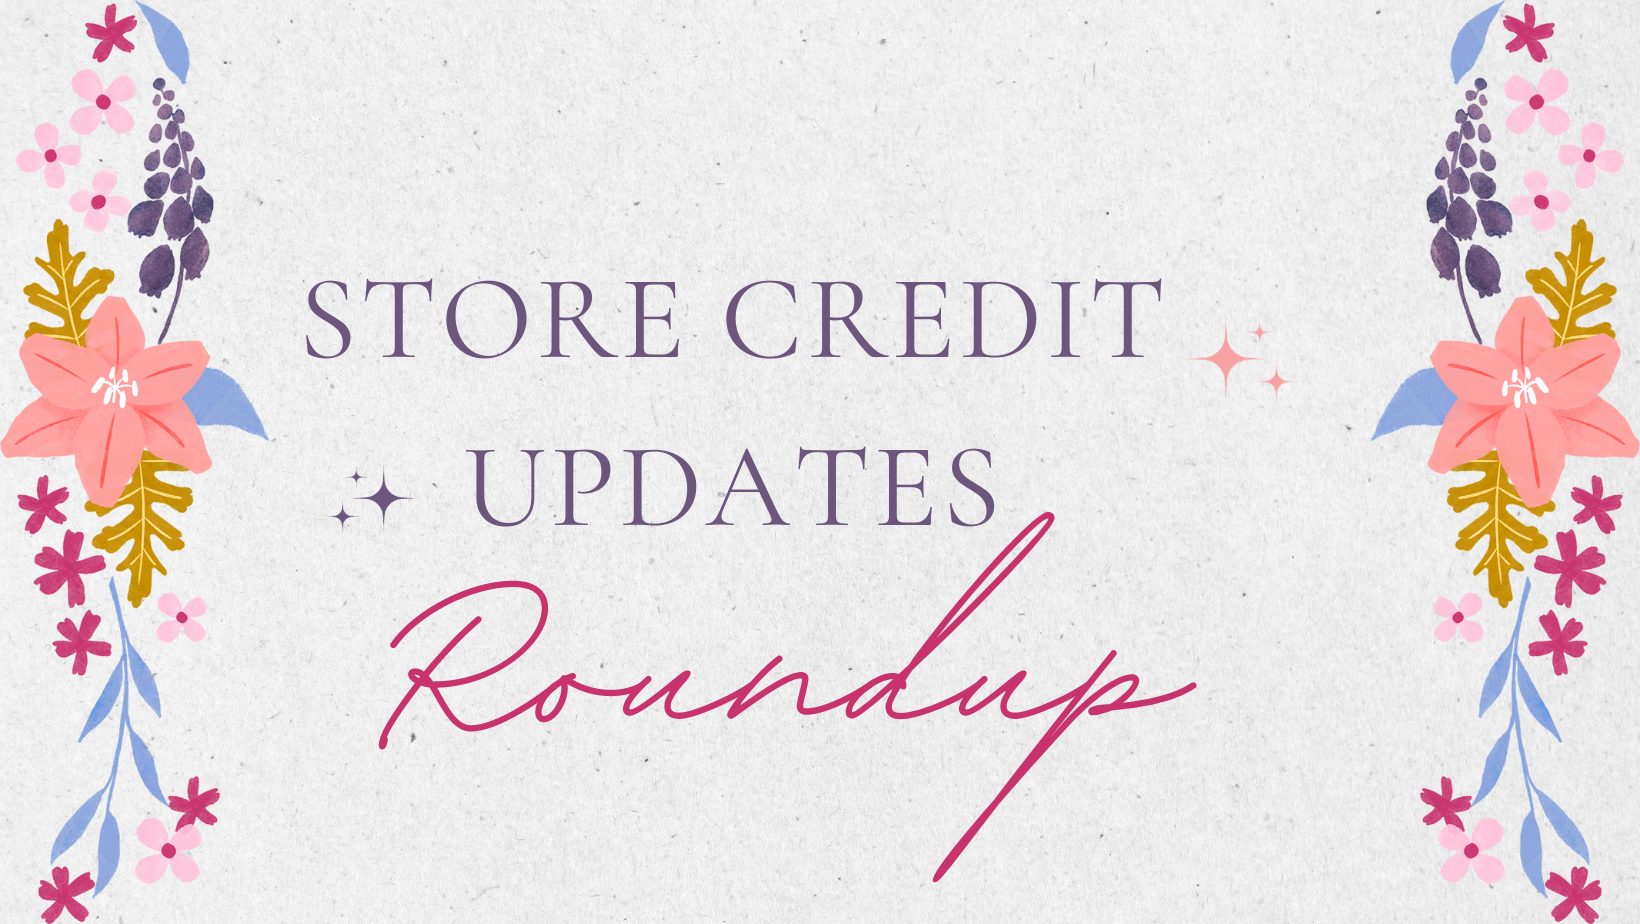 Store Credit Updates Roundup